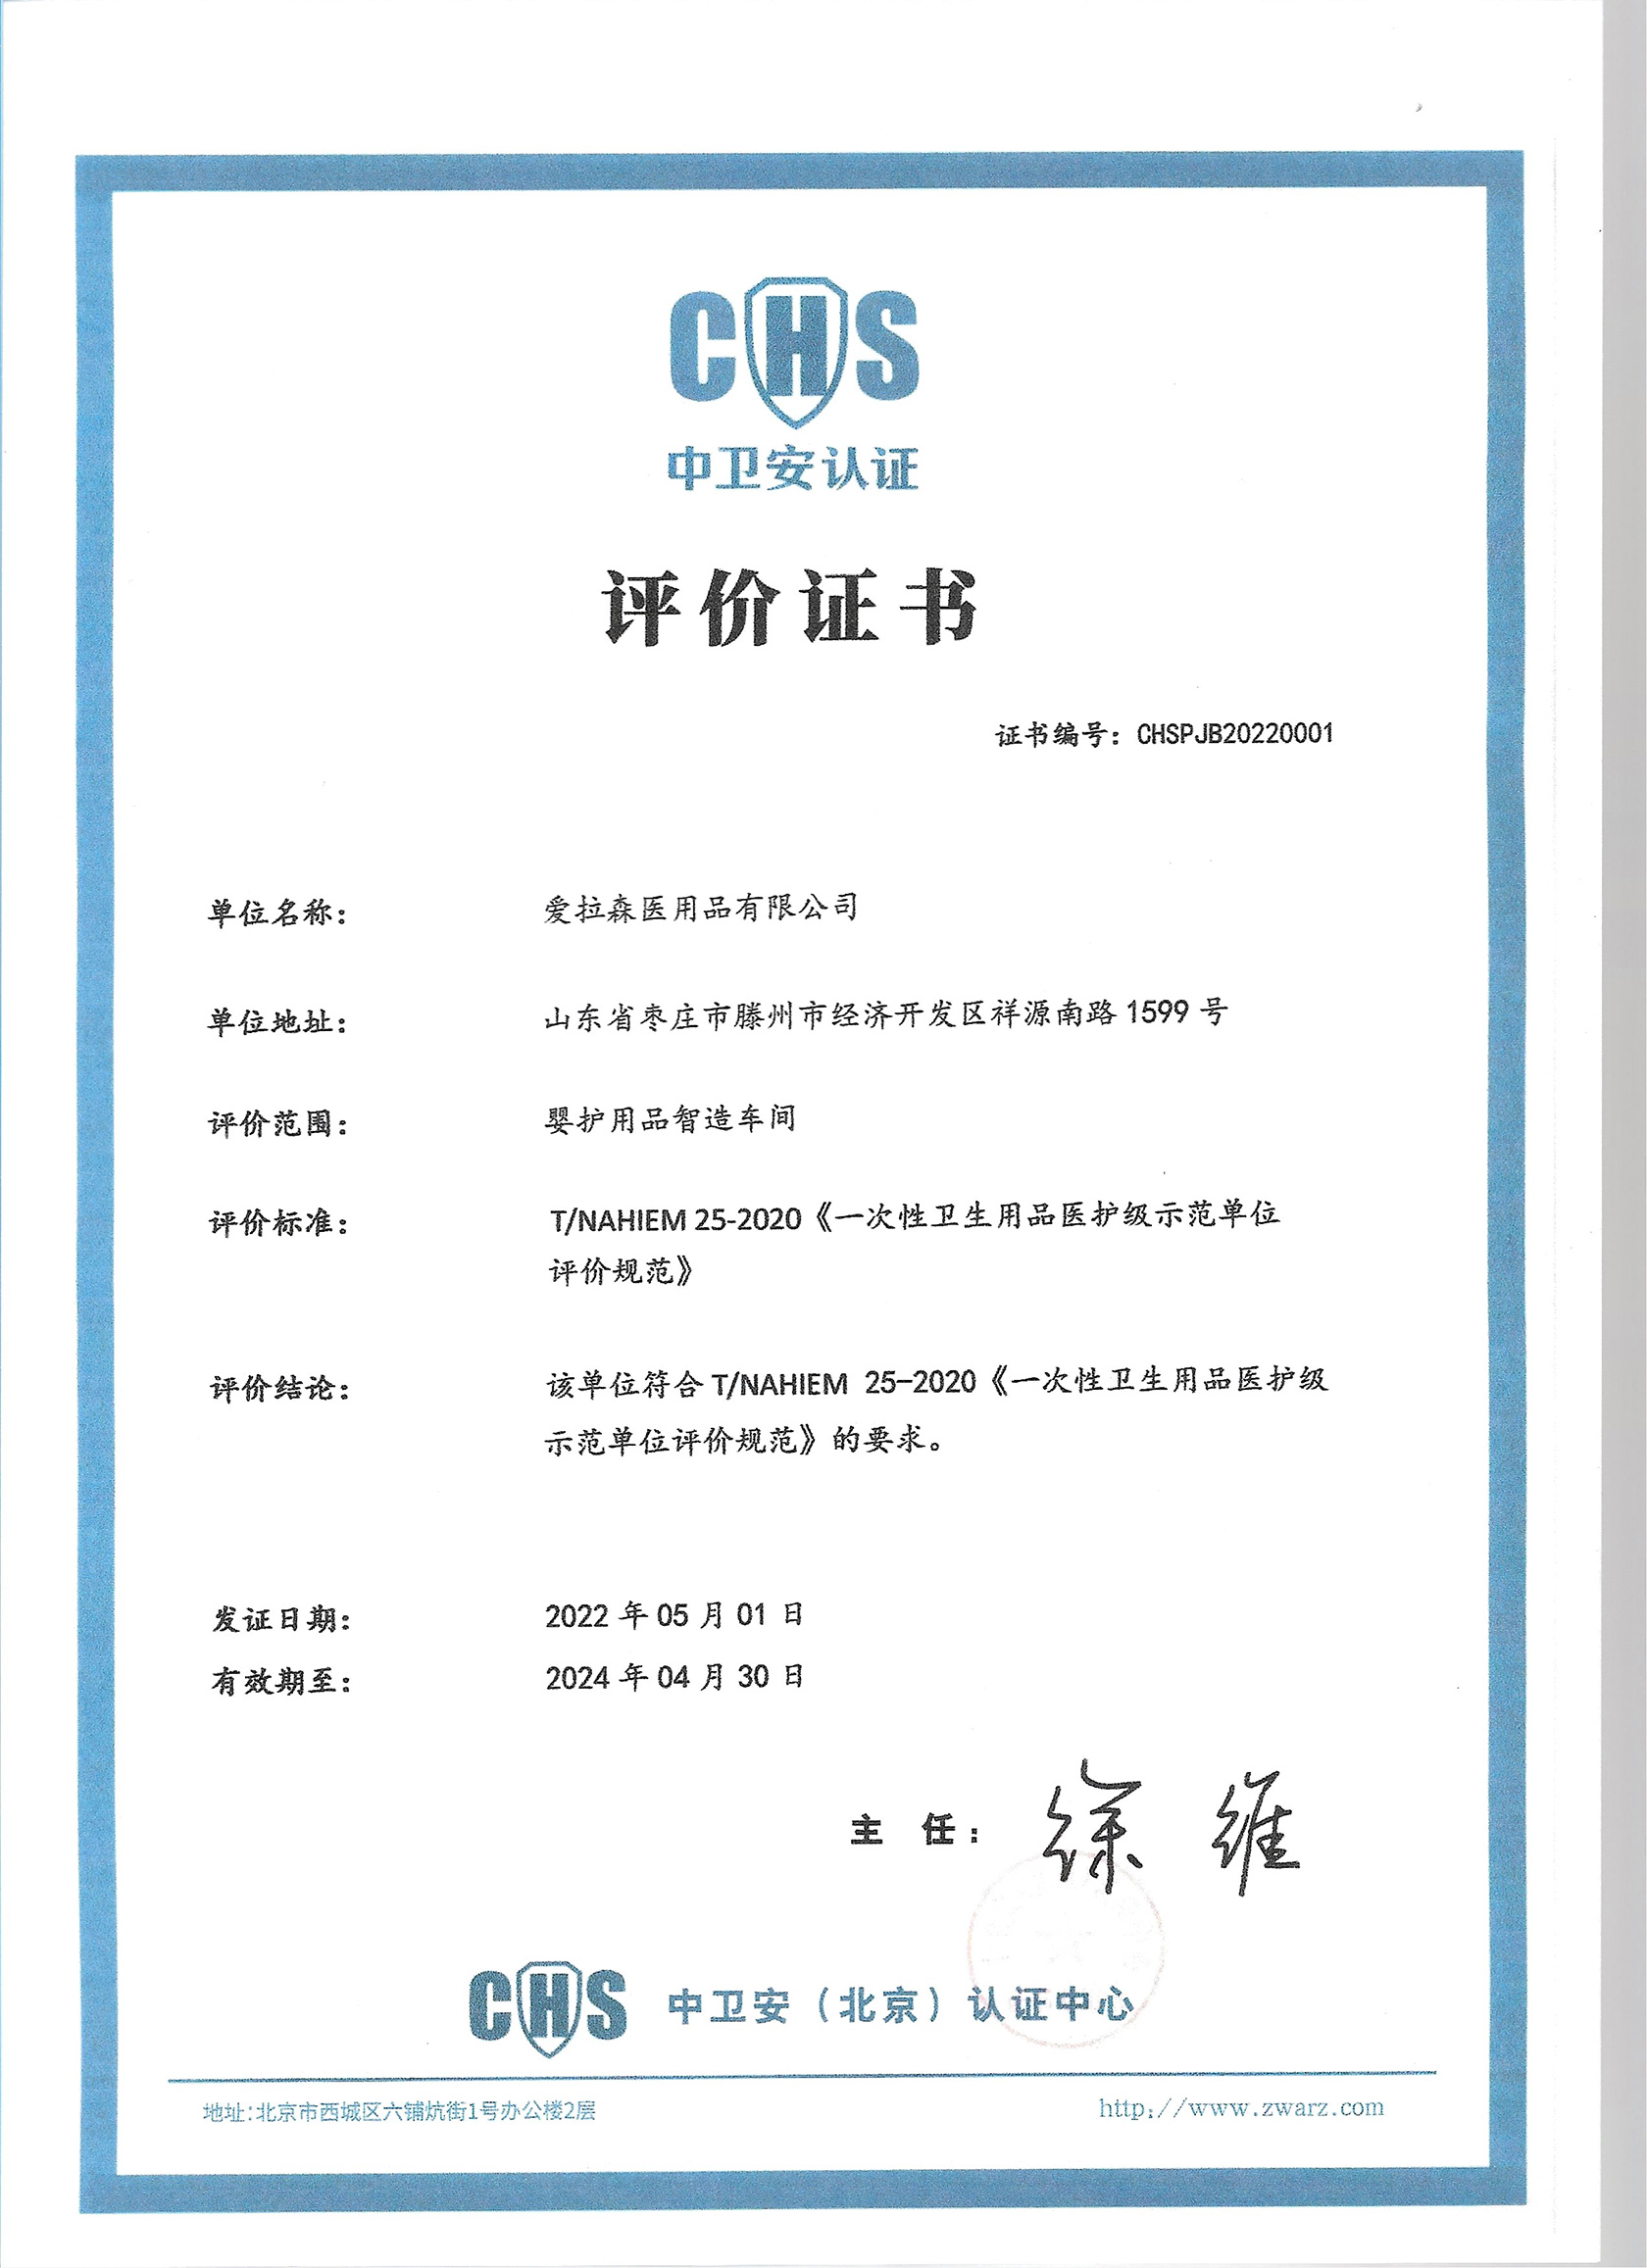 Medical-grade factory certification